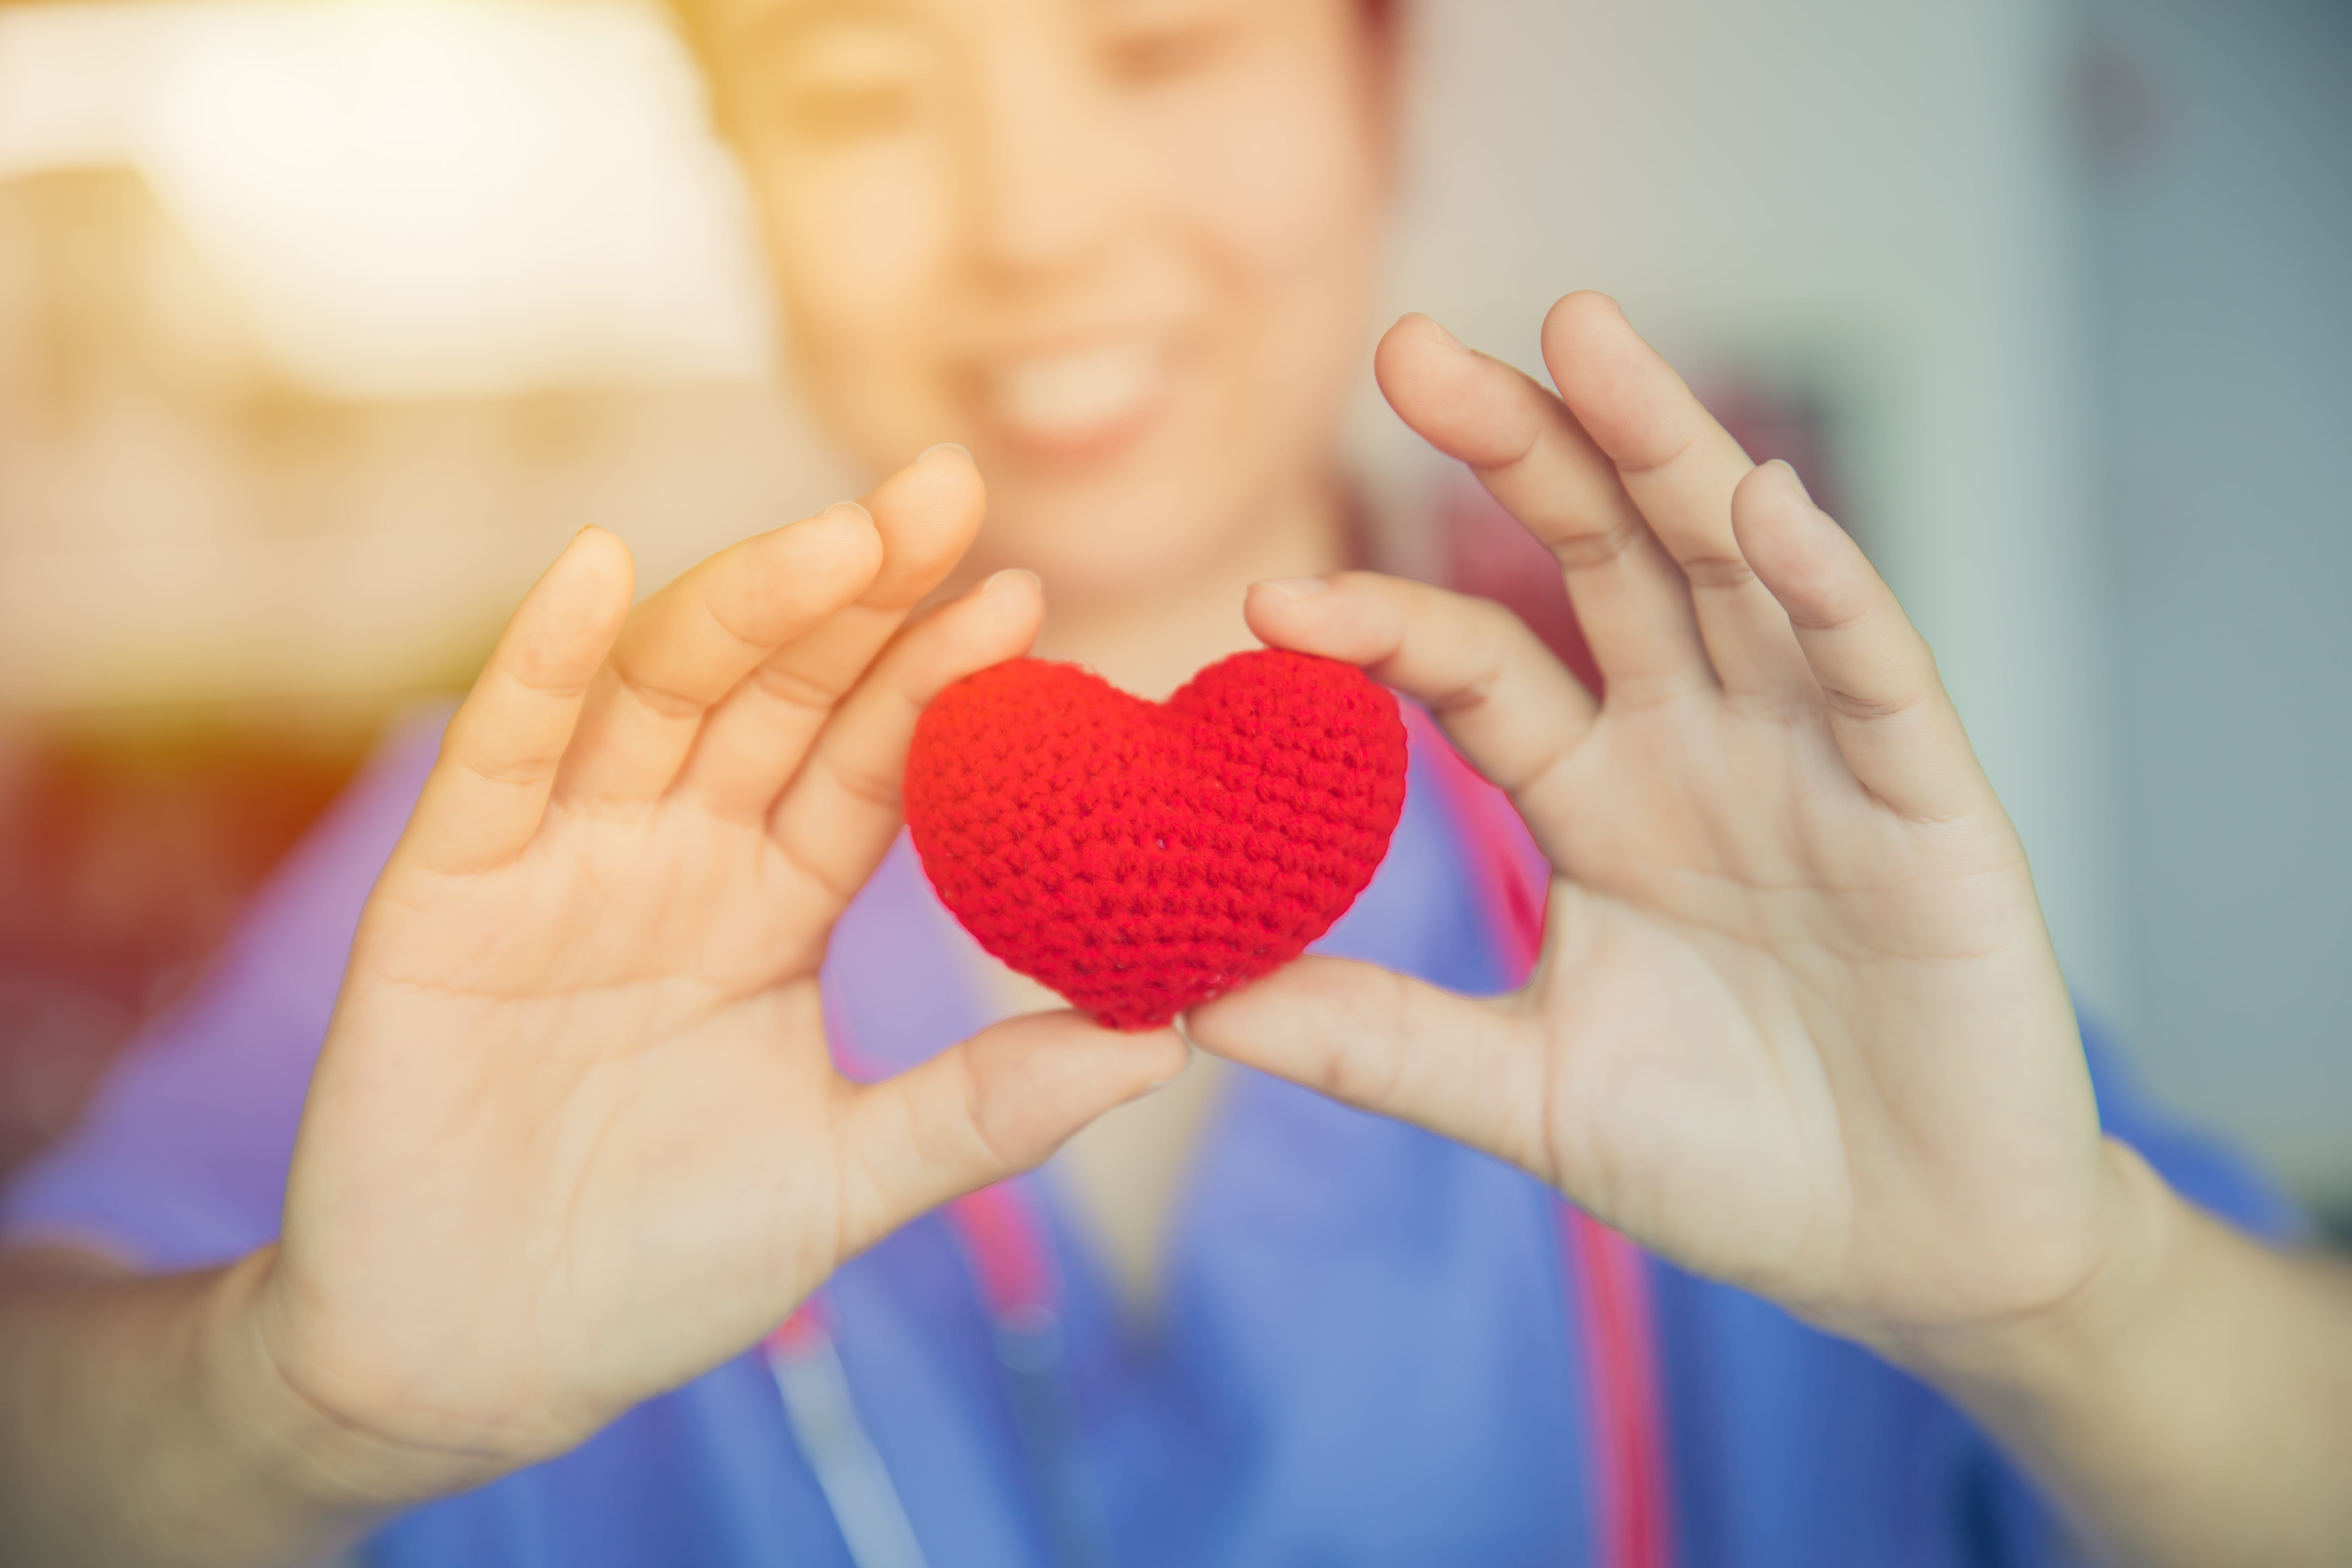 Tampa Cardiovascular Associates: Comprehensive Heart Care Services